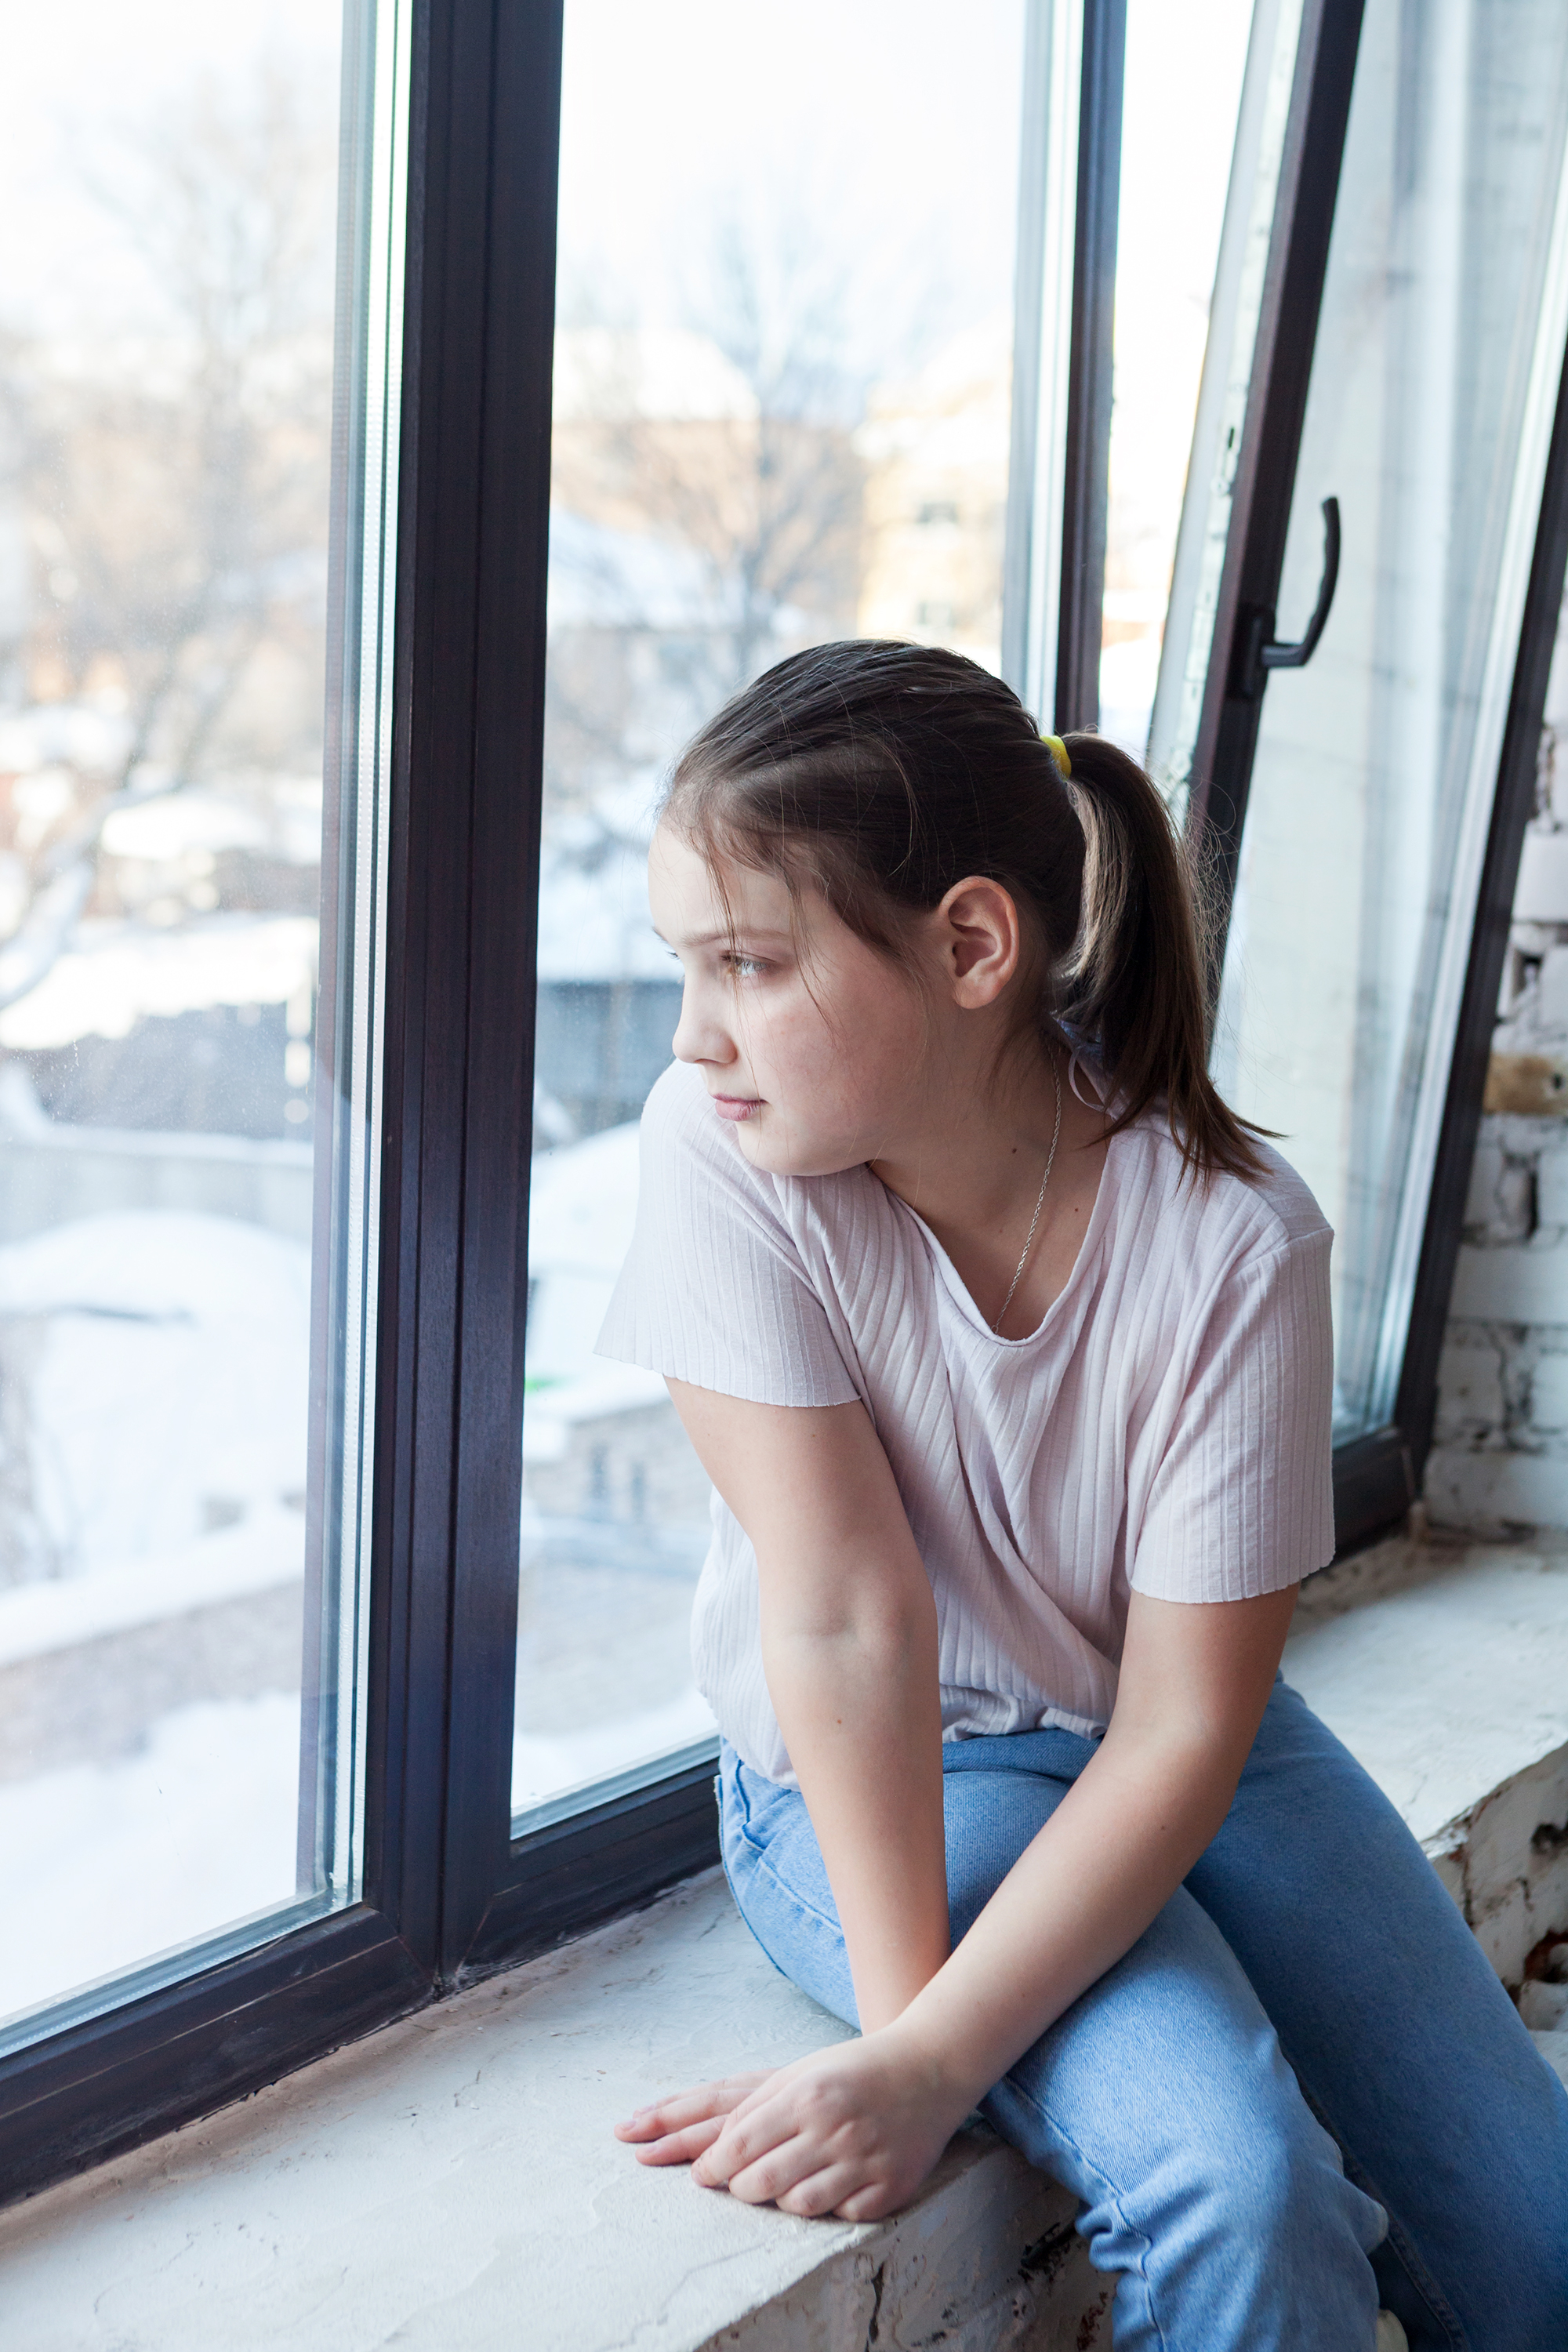 Junges Mädchen schaut aus dem Fenster | Quelle: Shutterstock